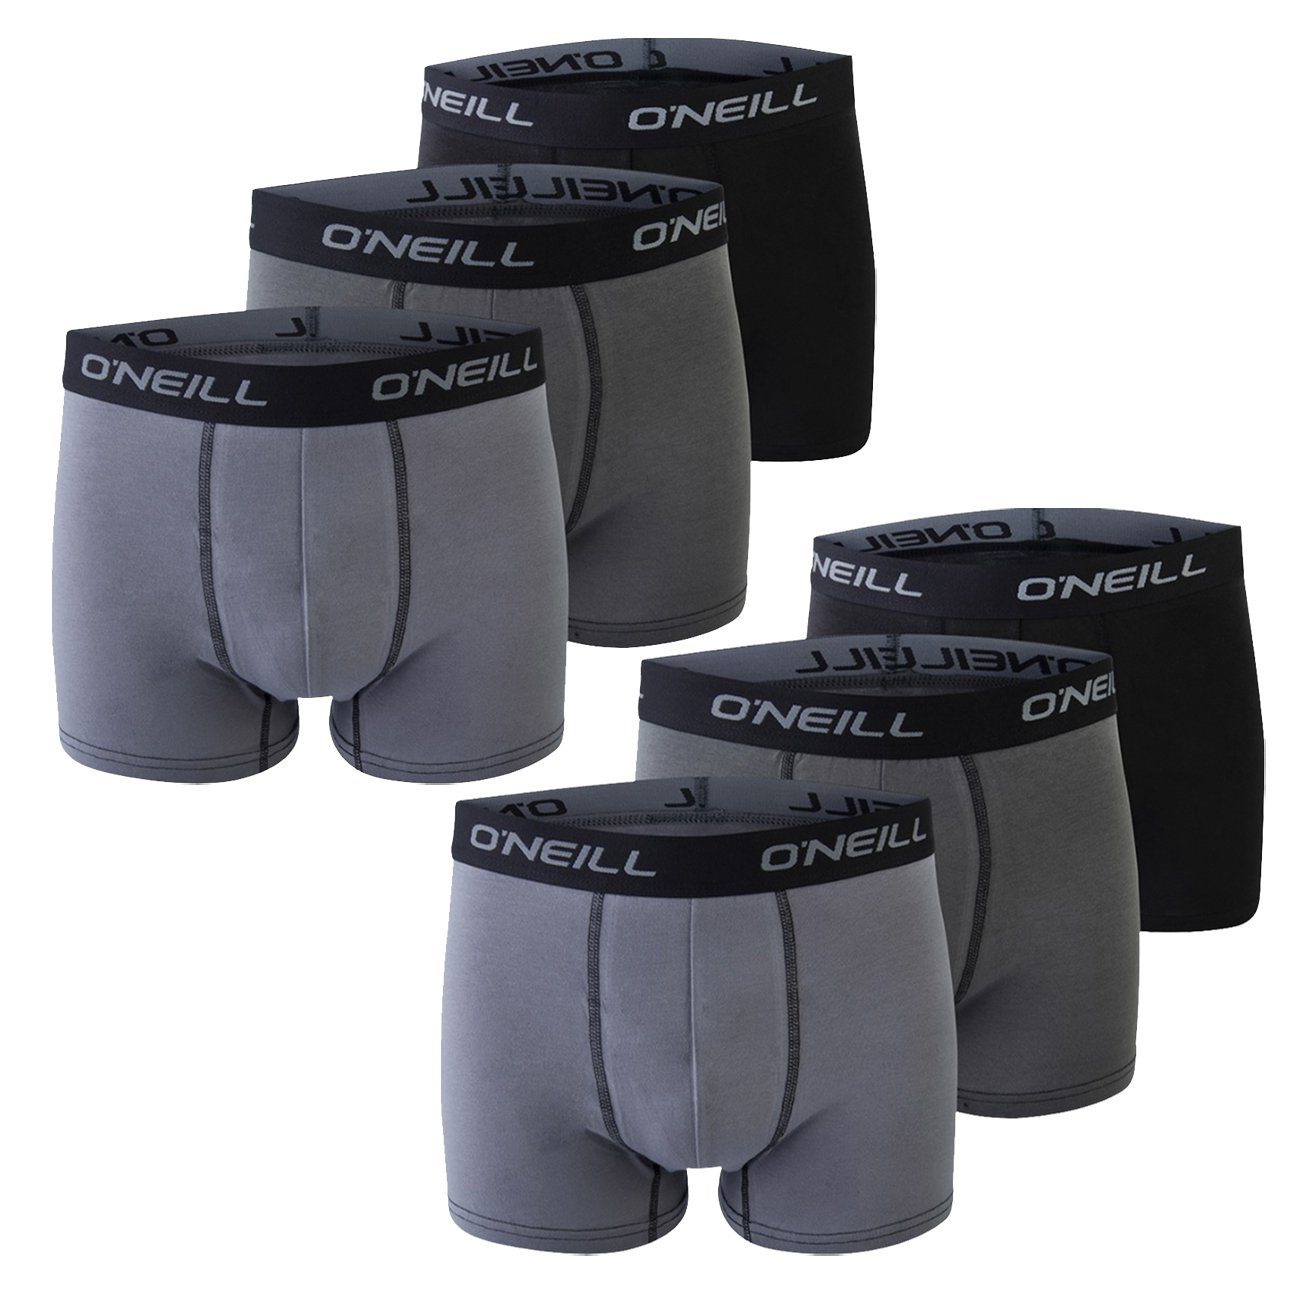 O'Neill Boxershorts Plain Topline 6er Pack (6-St) mit Logo Webbund 4x Grey 2x Black (6569P)